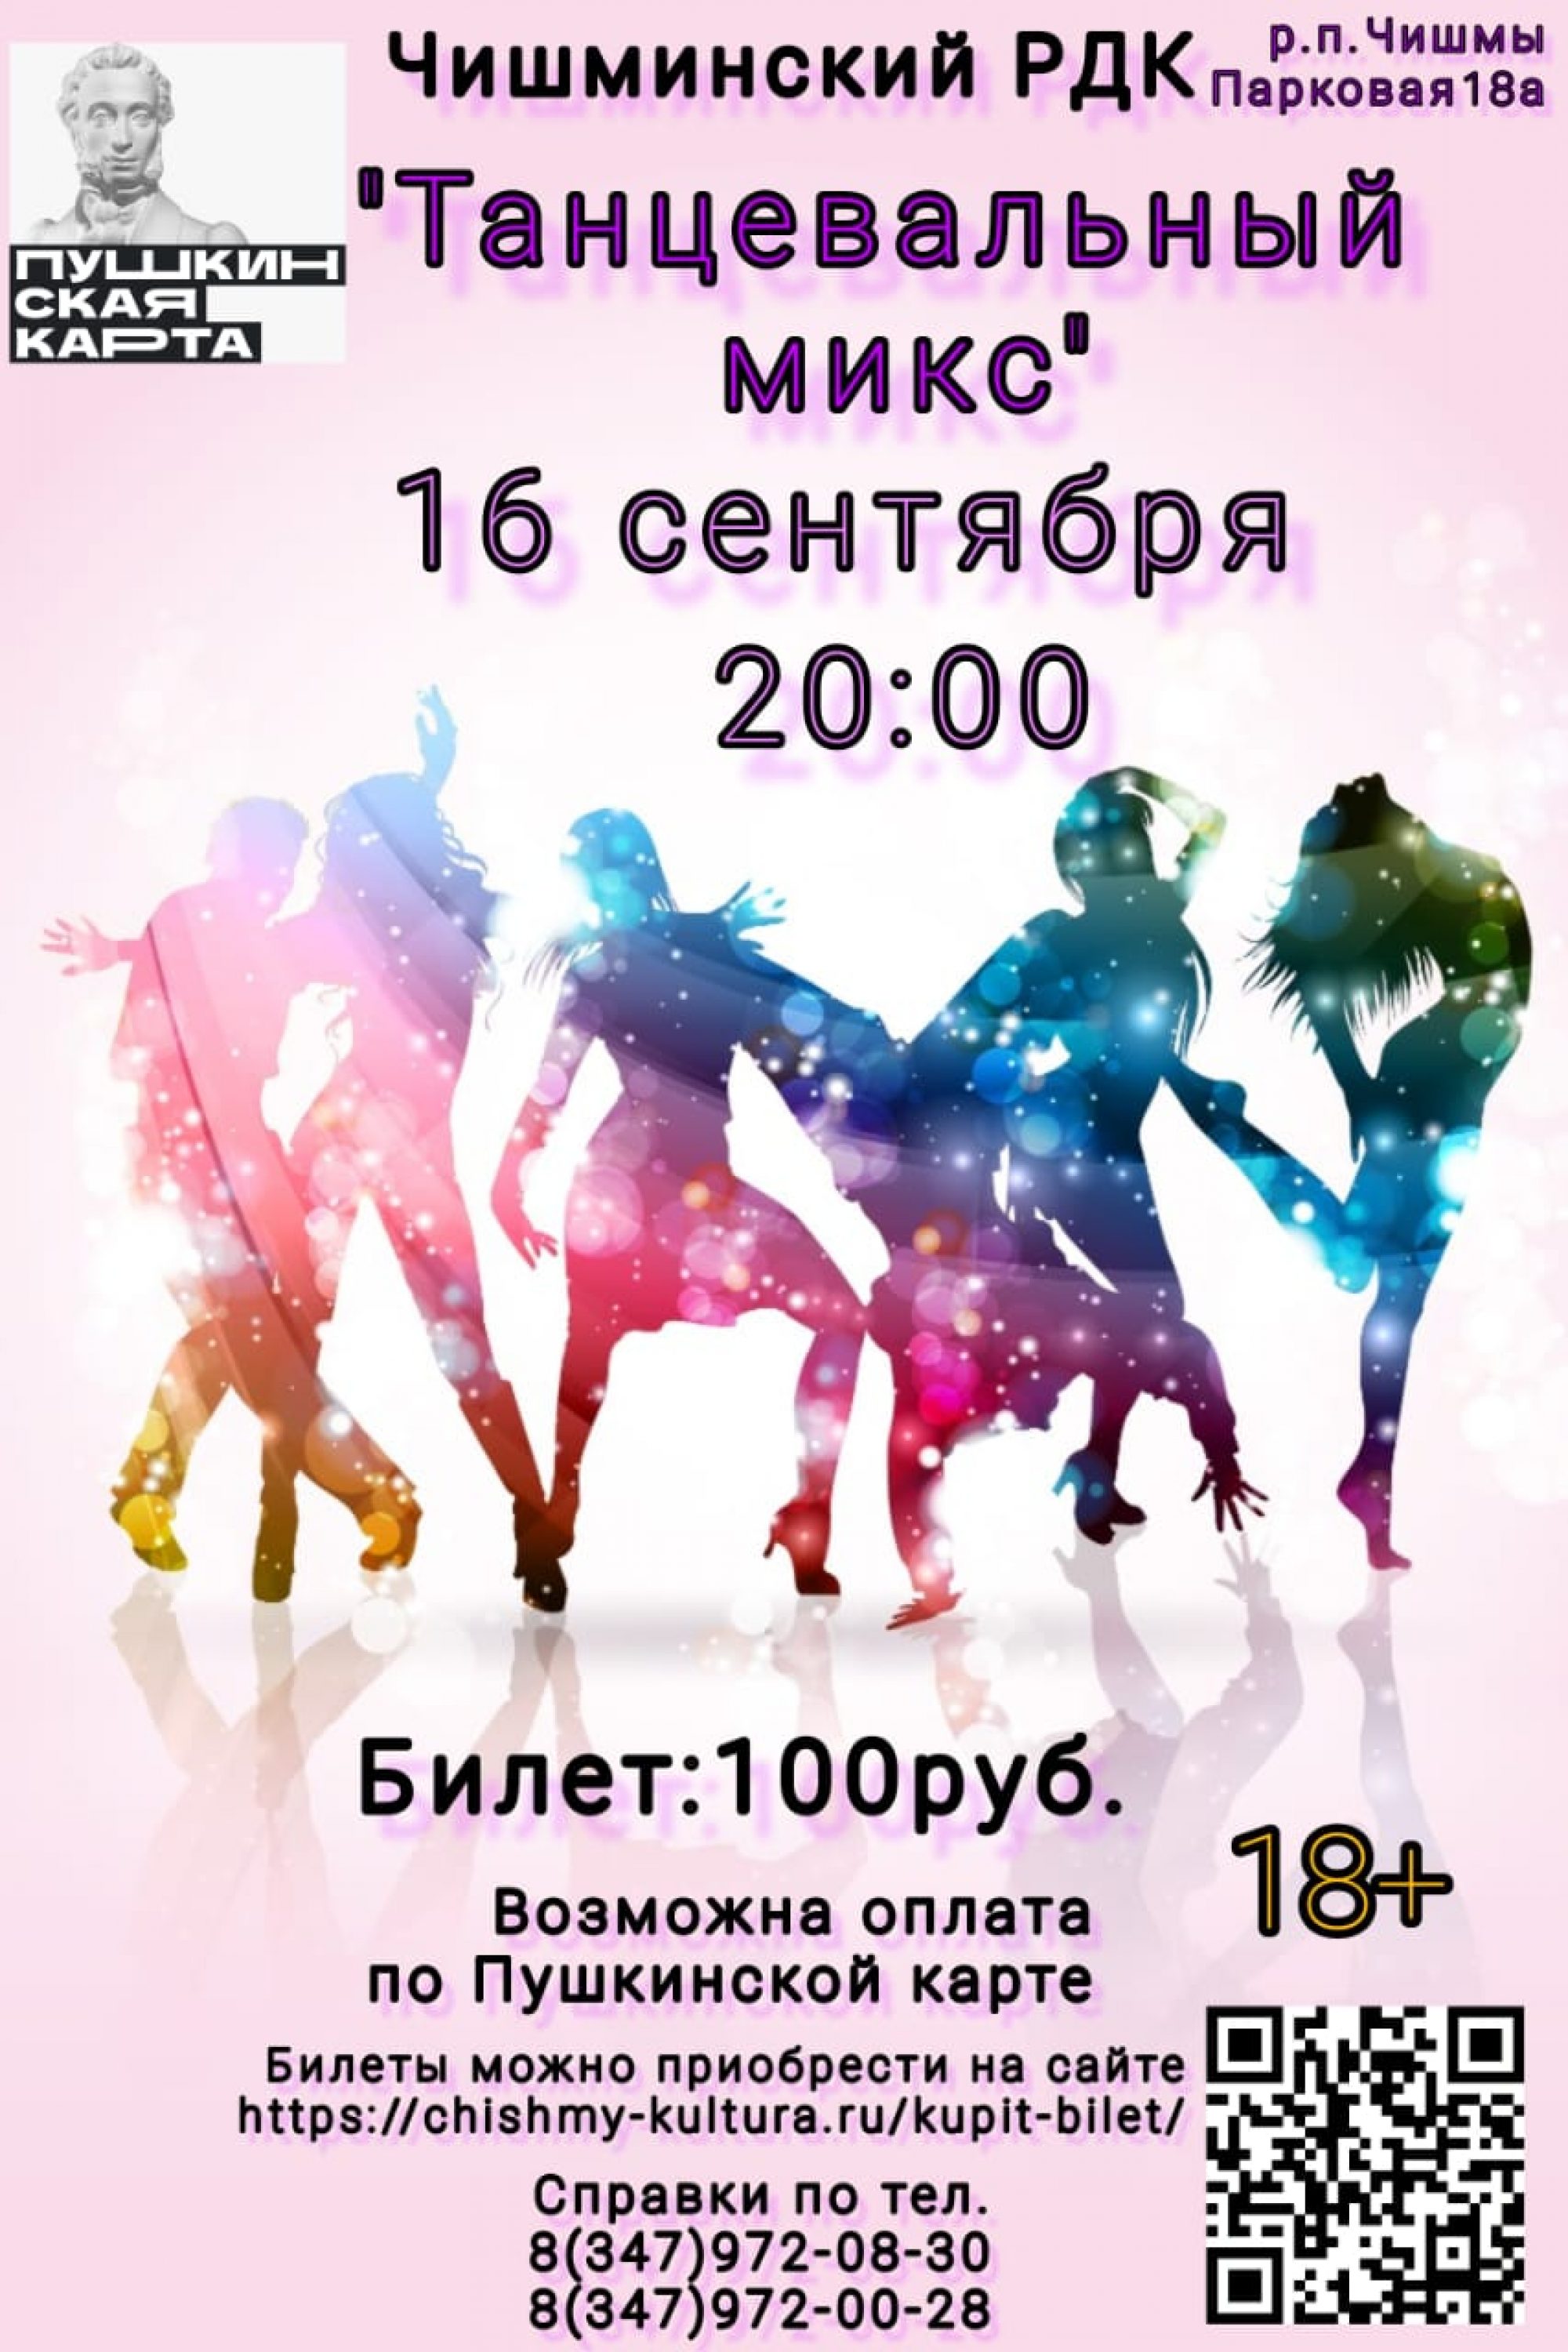 Музыкальная программа “Танцевальный микс” 16.09.22  Начало: 20:00